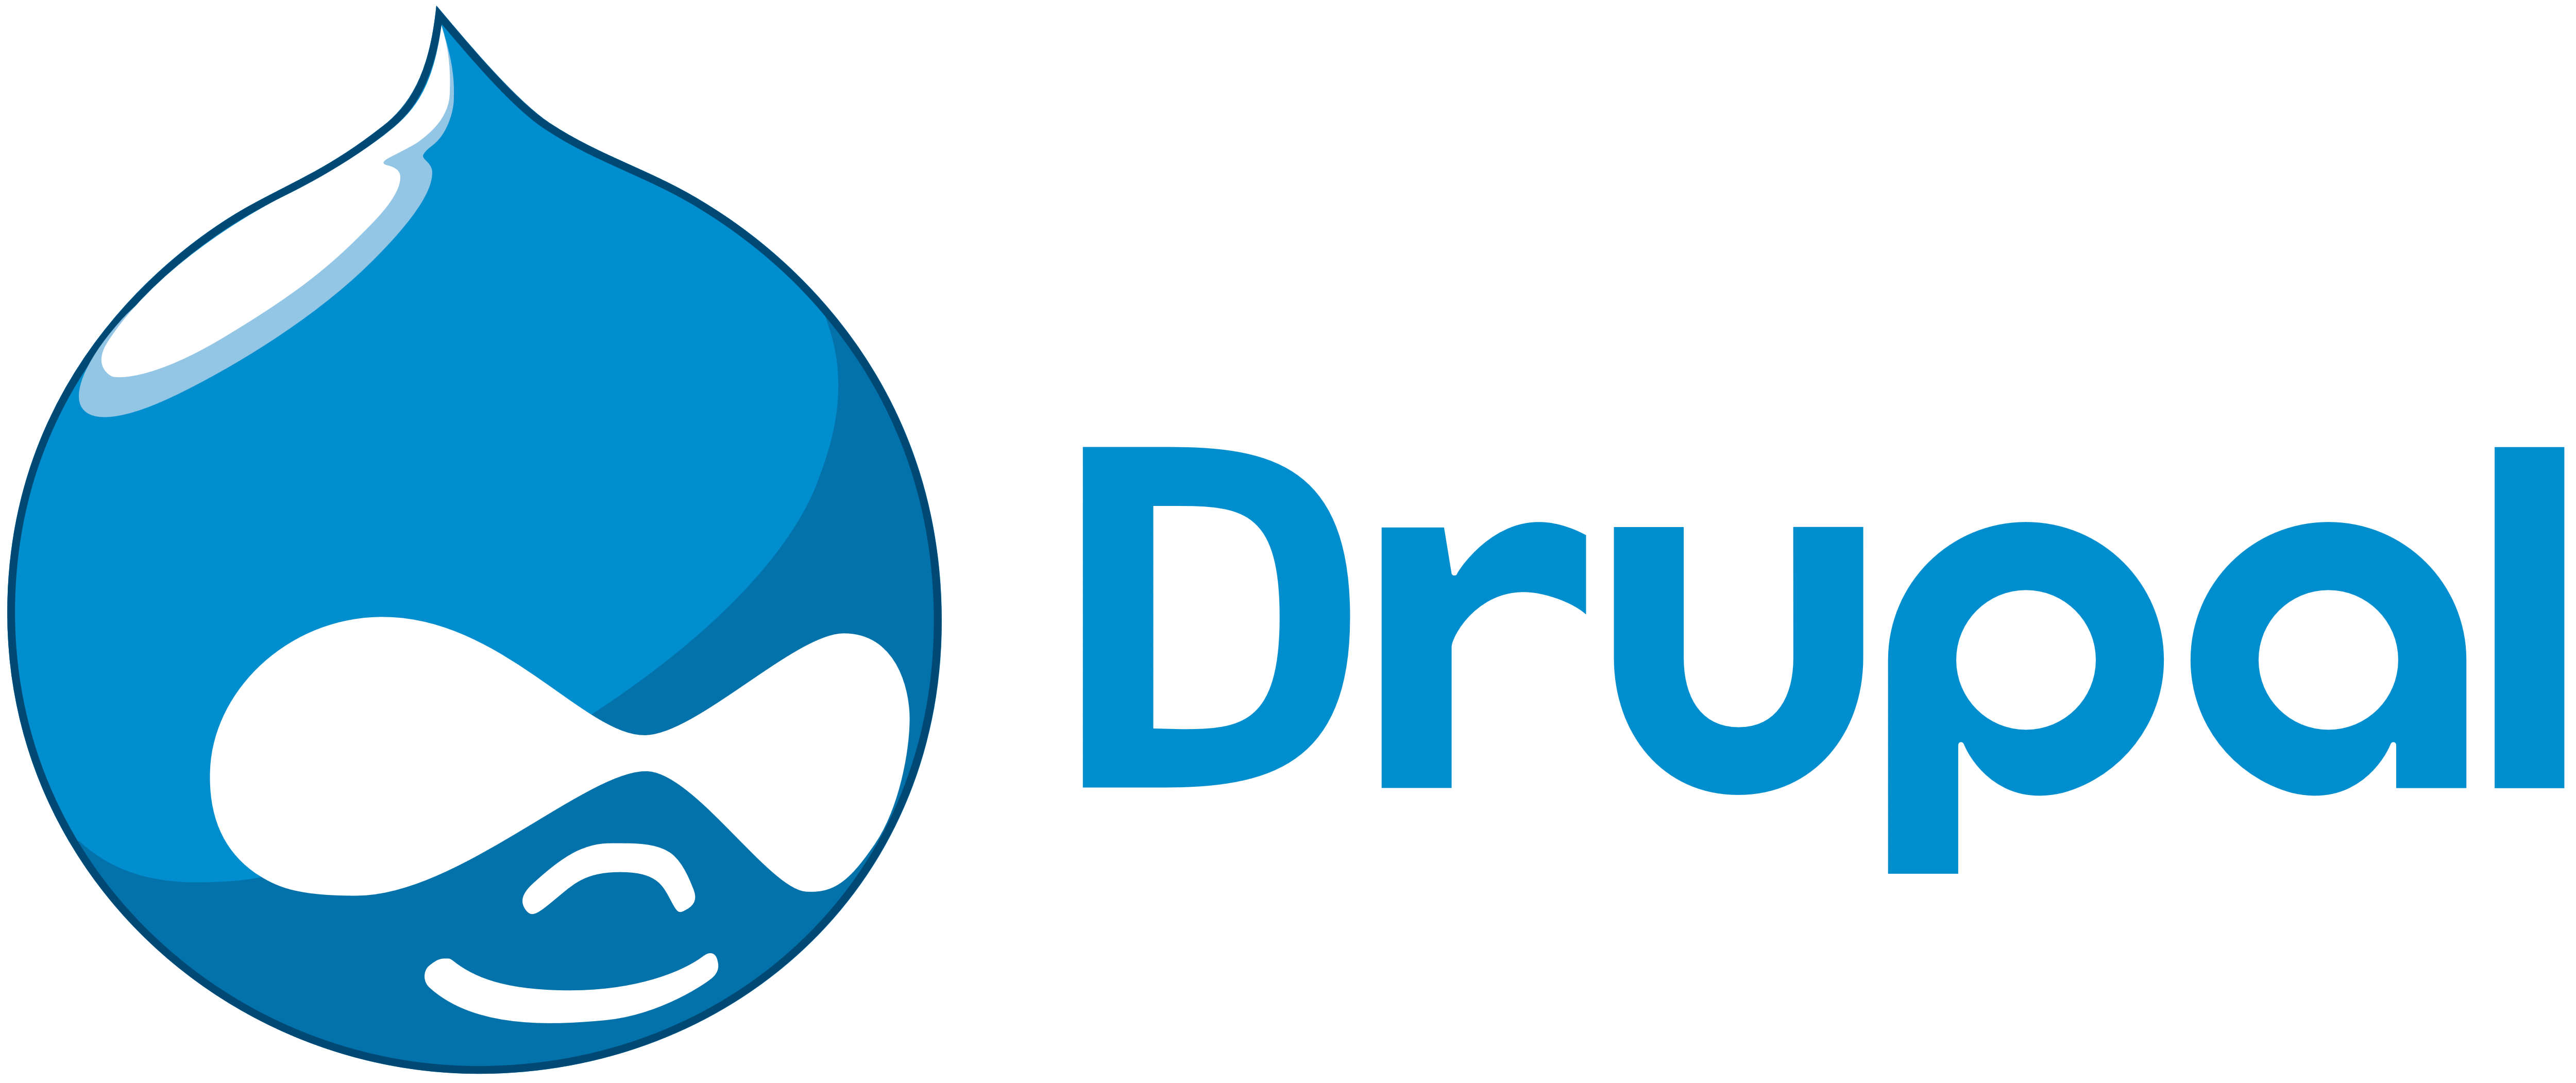 5 Motivos para usar Drupal